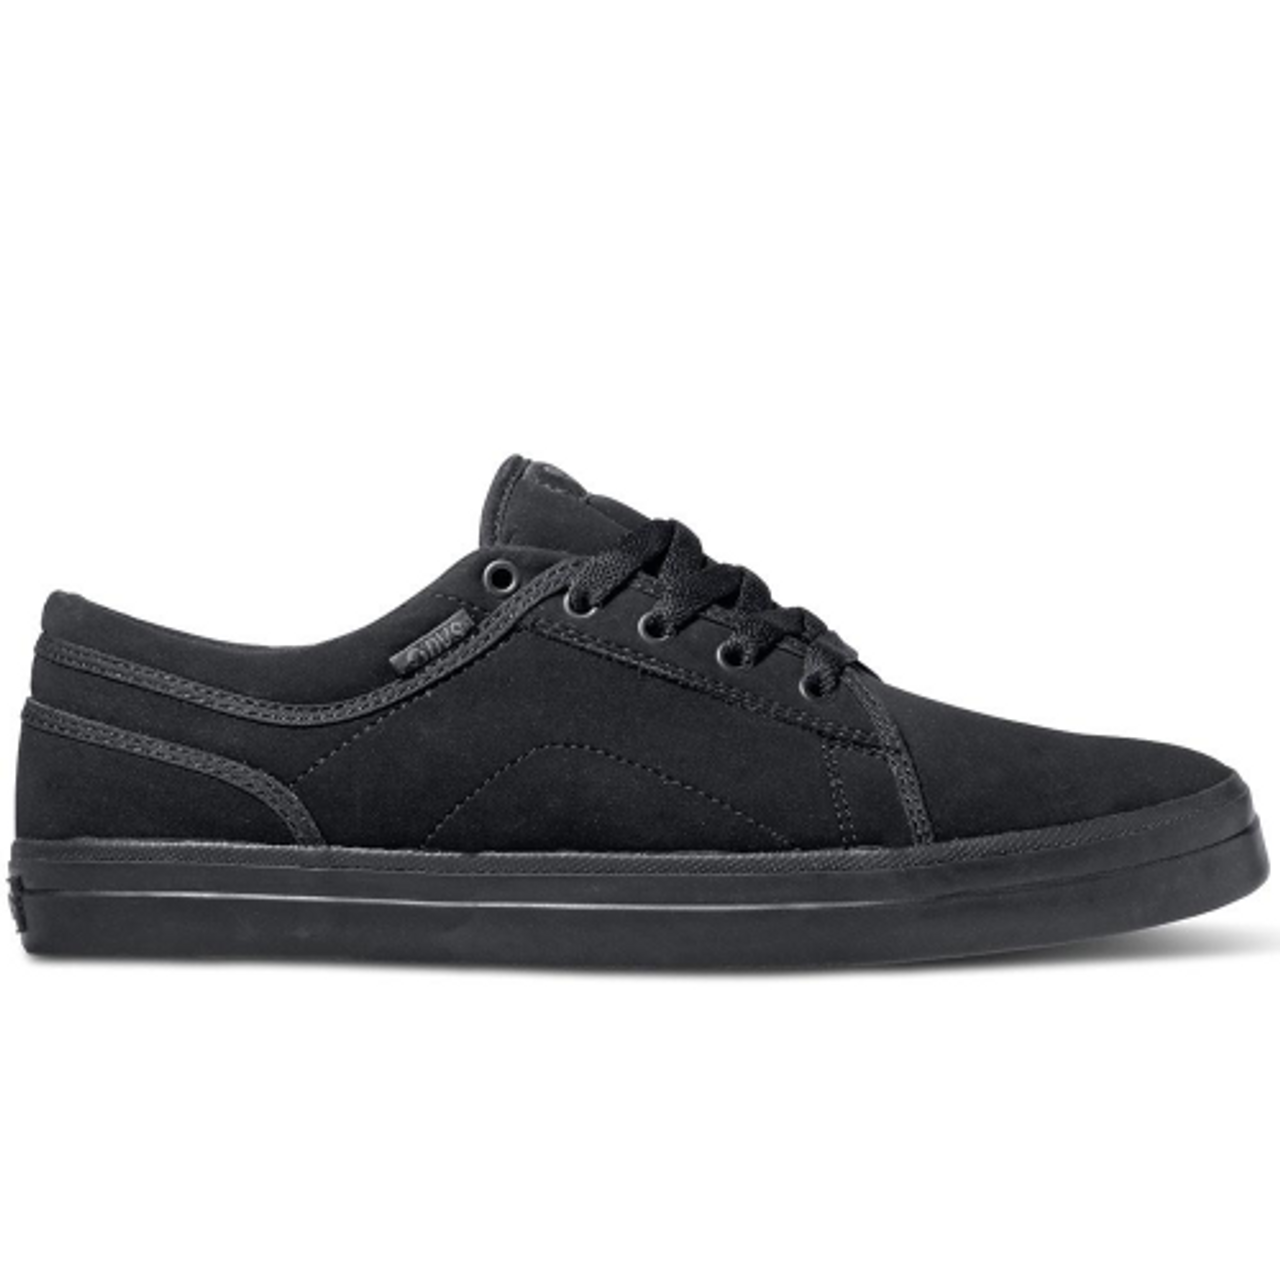 DVS Aversa - Black/Grey Nubuck 003 - Skateboard Shoes - ActionVillage